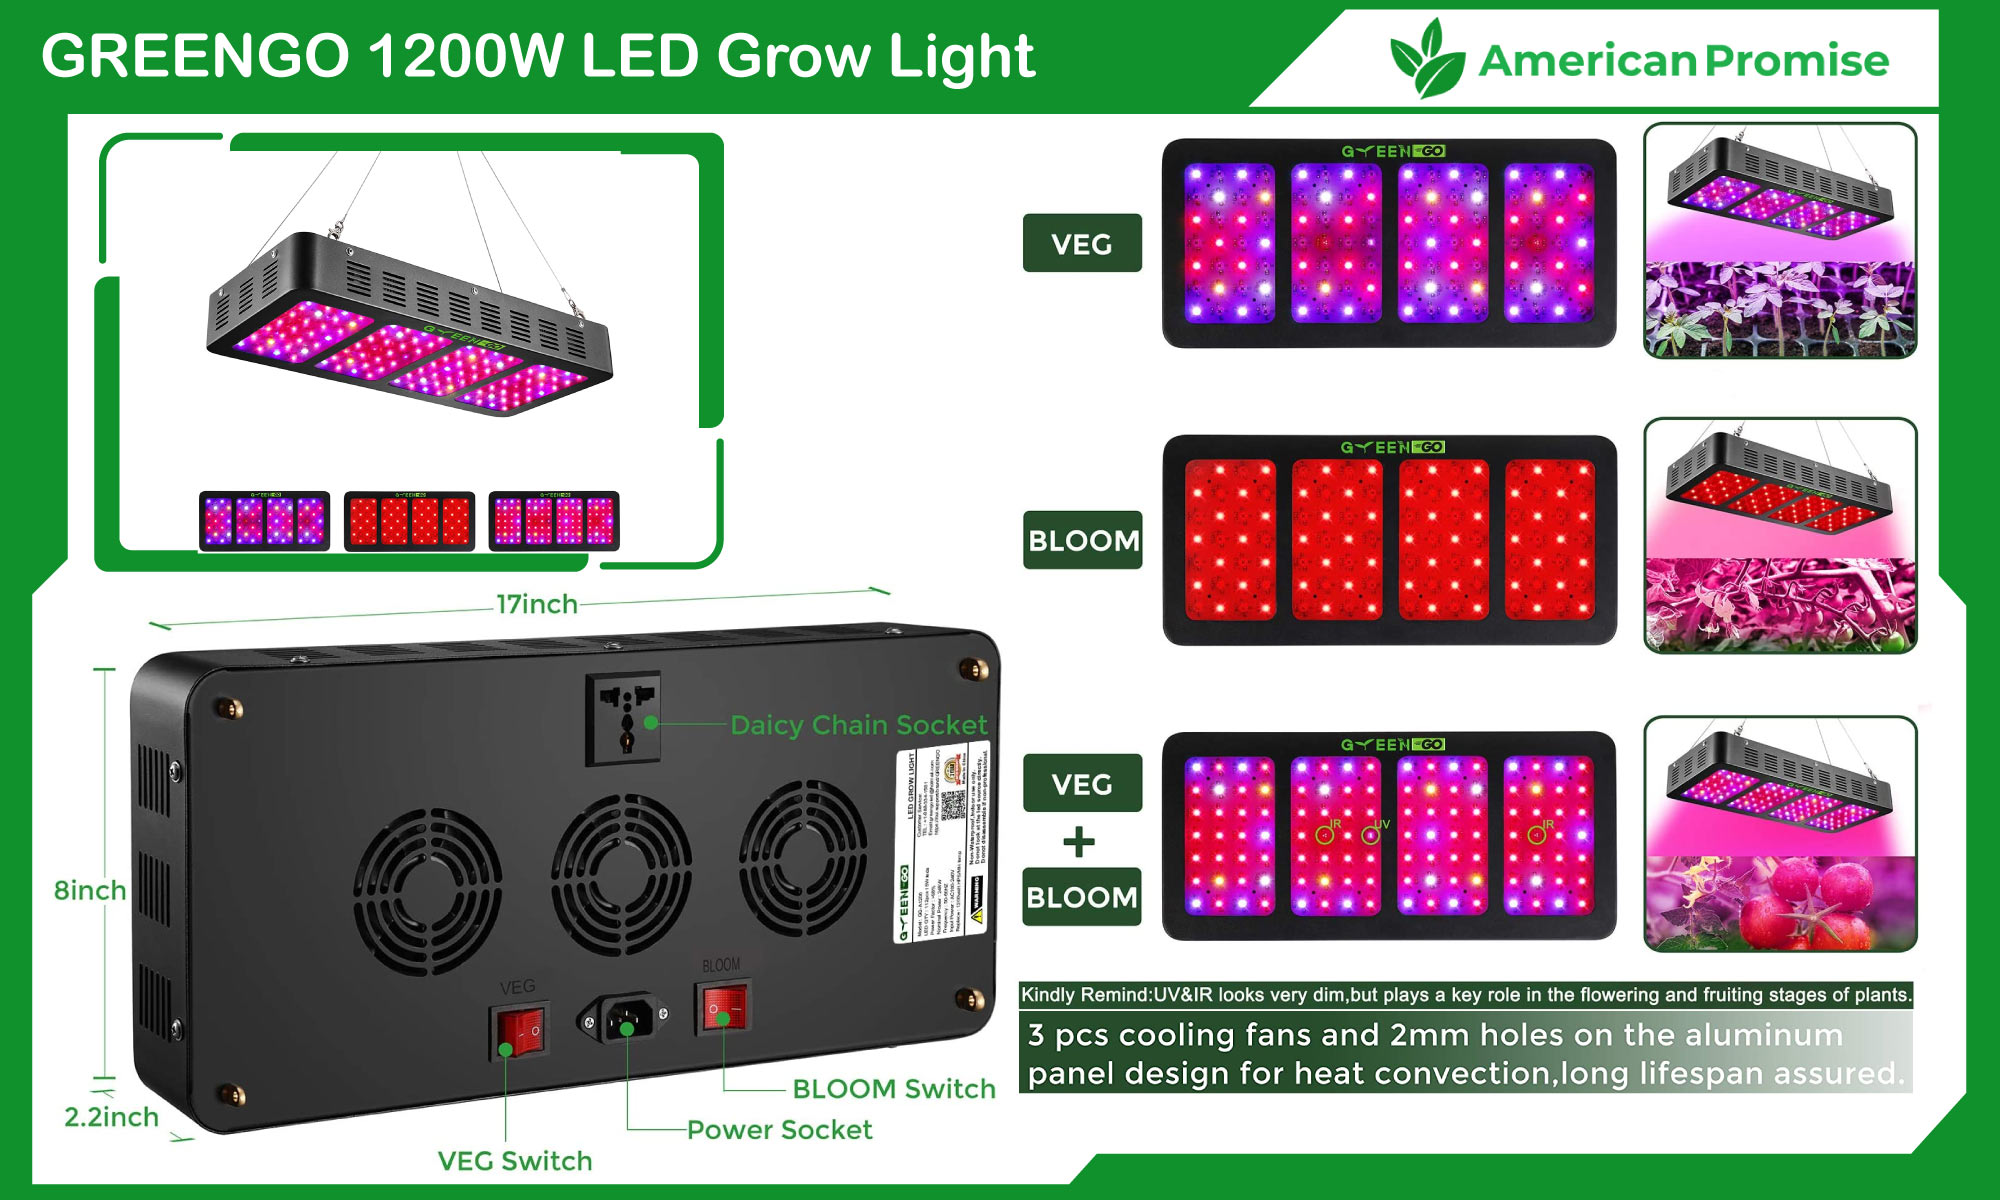 GREENGO 1200W LED Grow Light